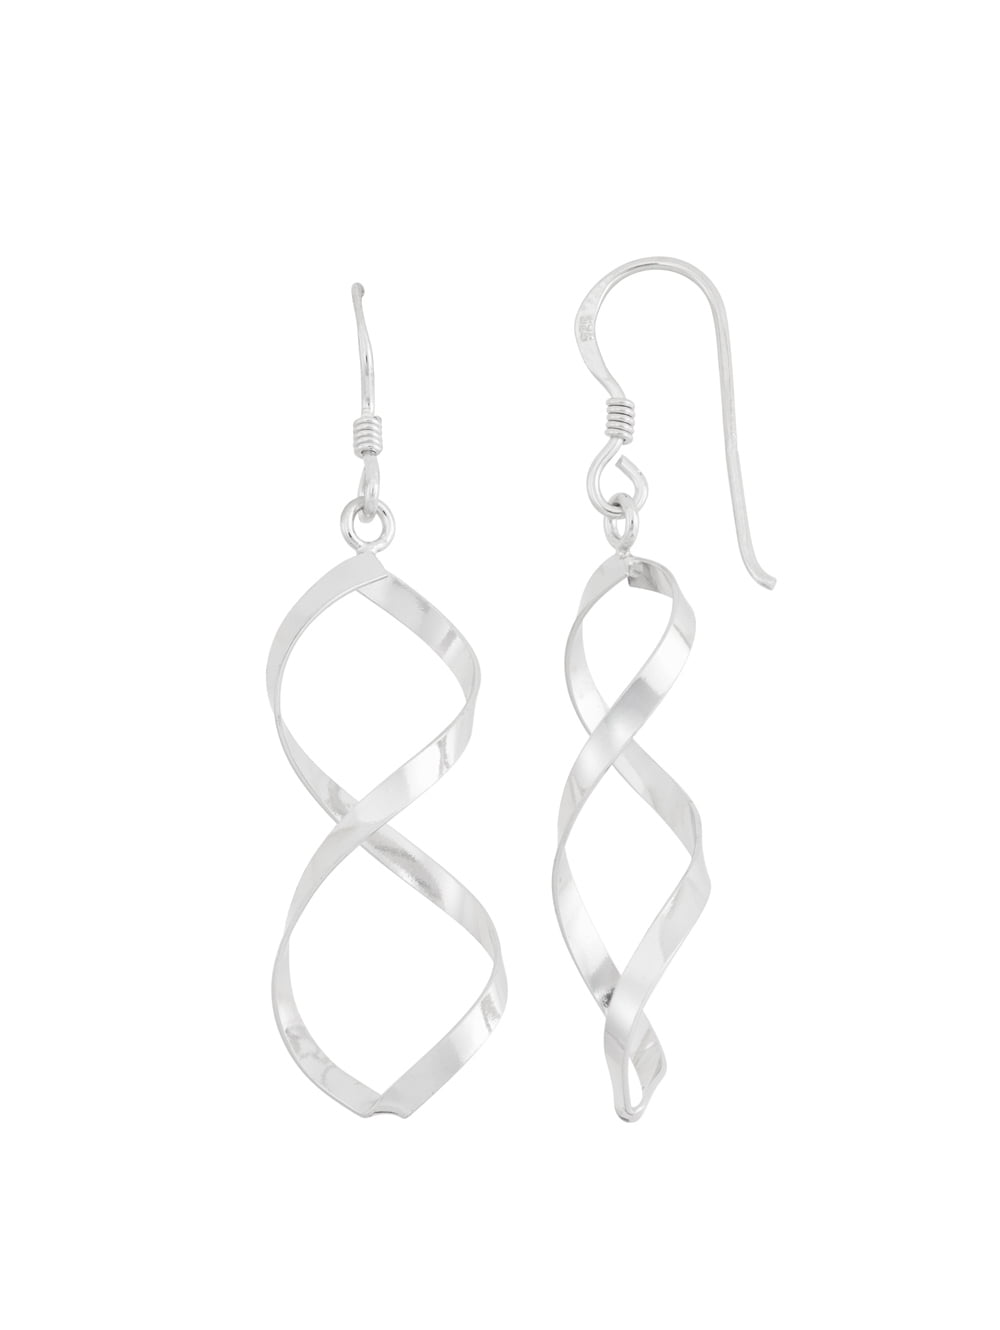 Silver Spiral Swirl Lightweight Metal Dangling Earrings 2 inch Hanging Dangle